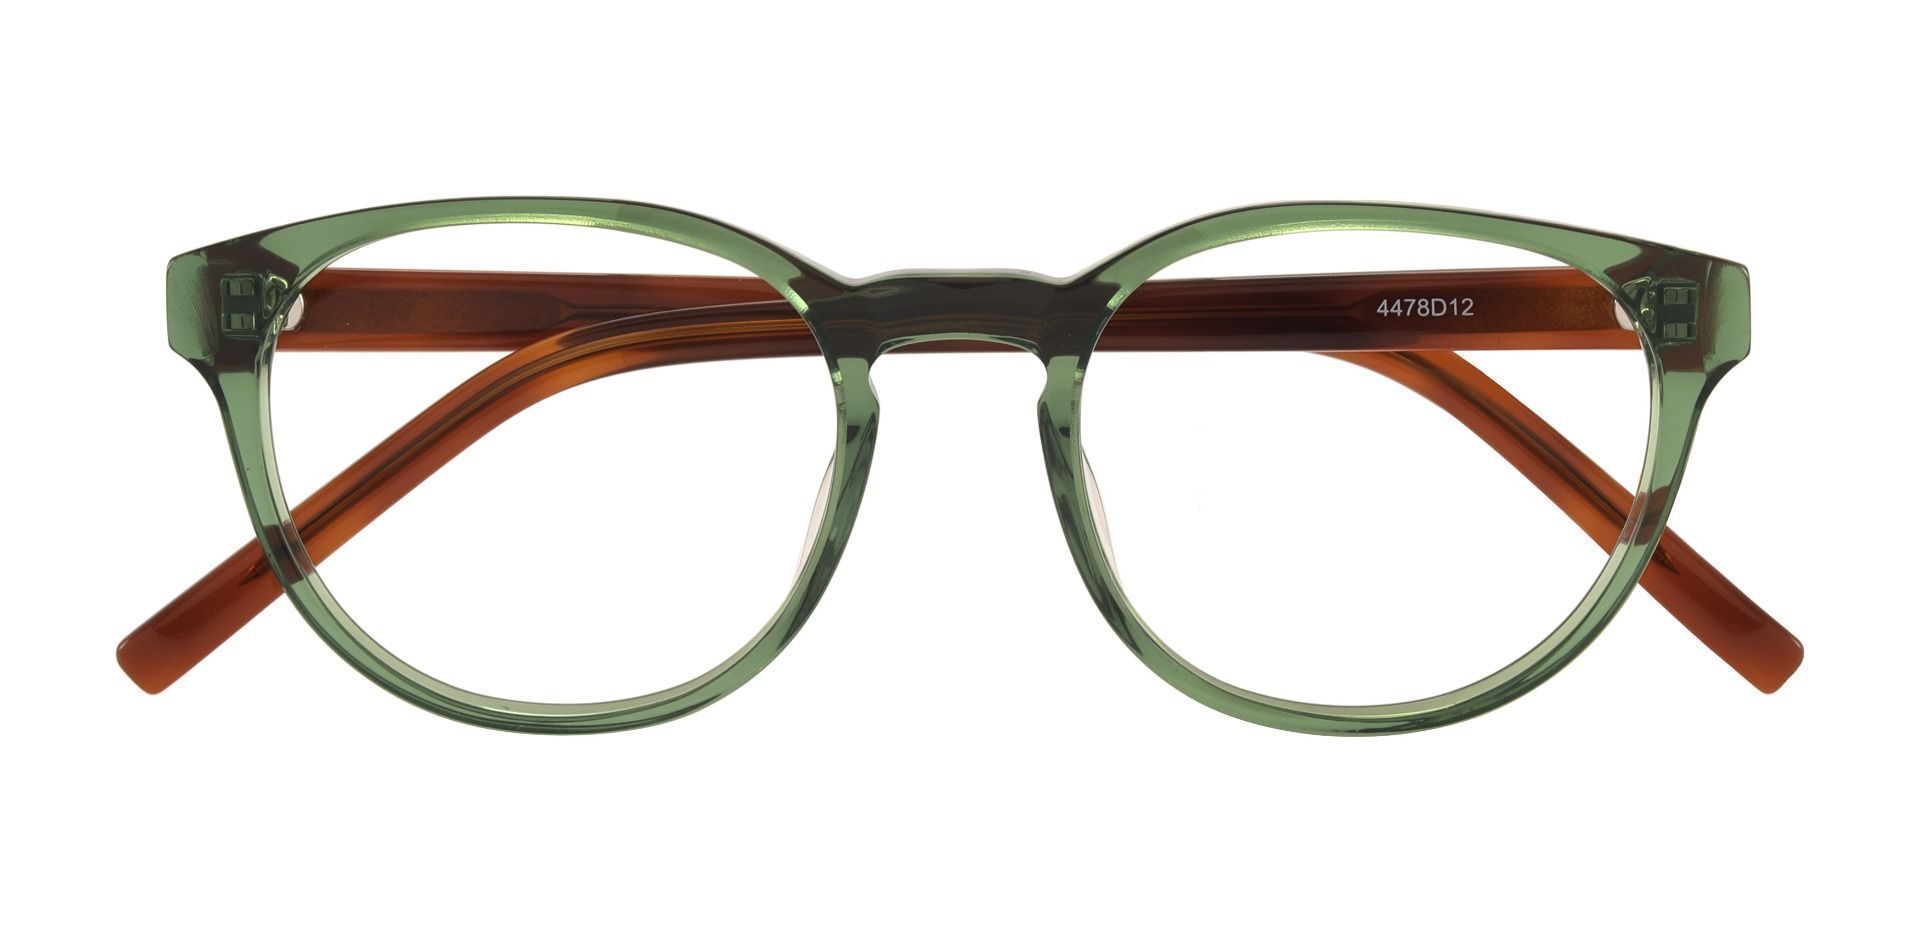 Wayland Oval Prescription Glasses - Green